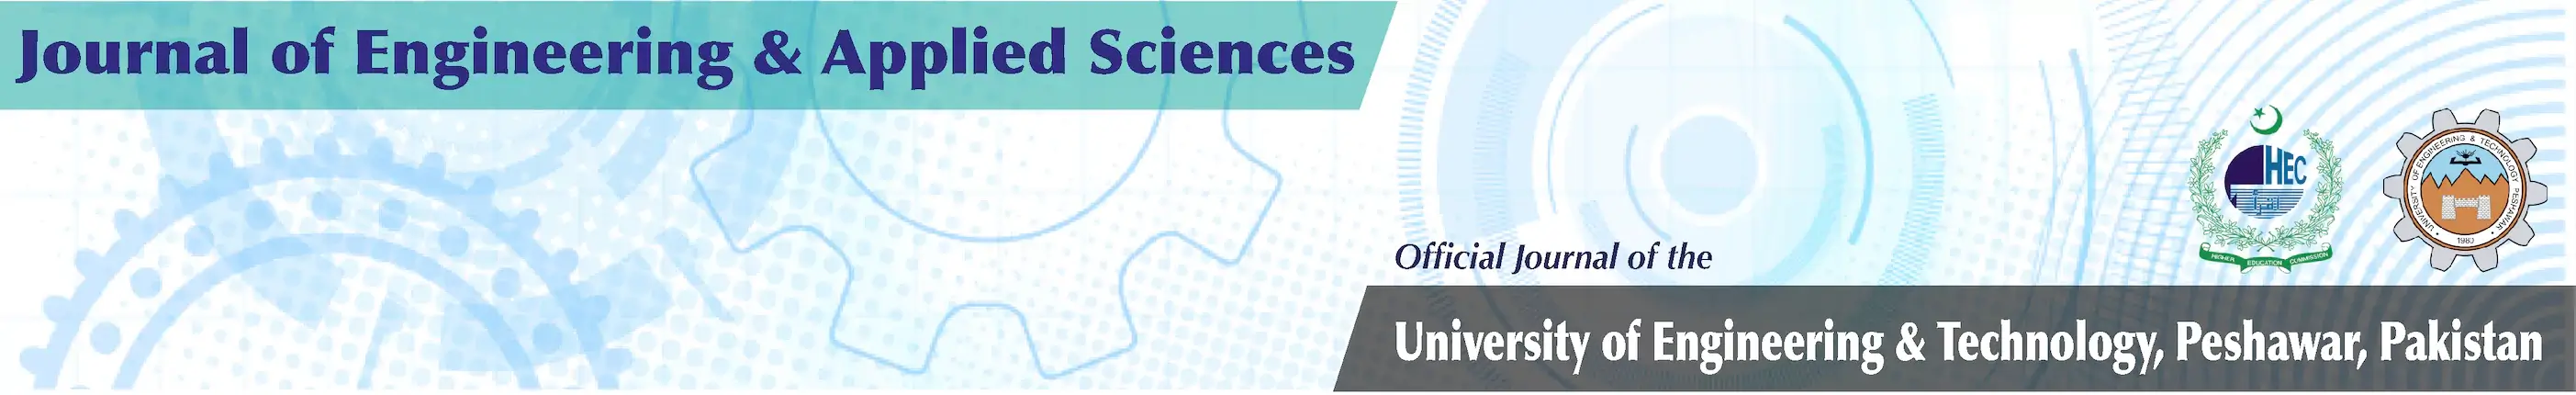 Journal of Engineering & Applied Sciences